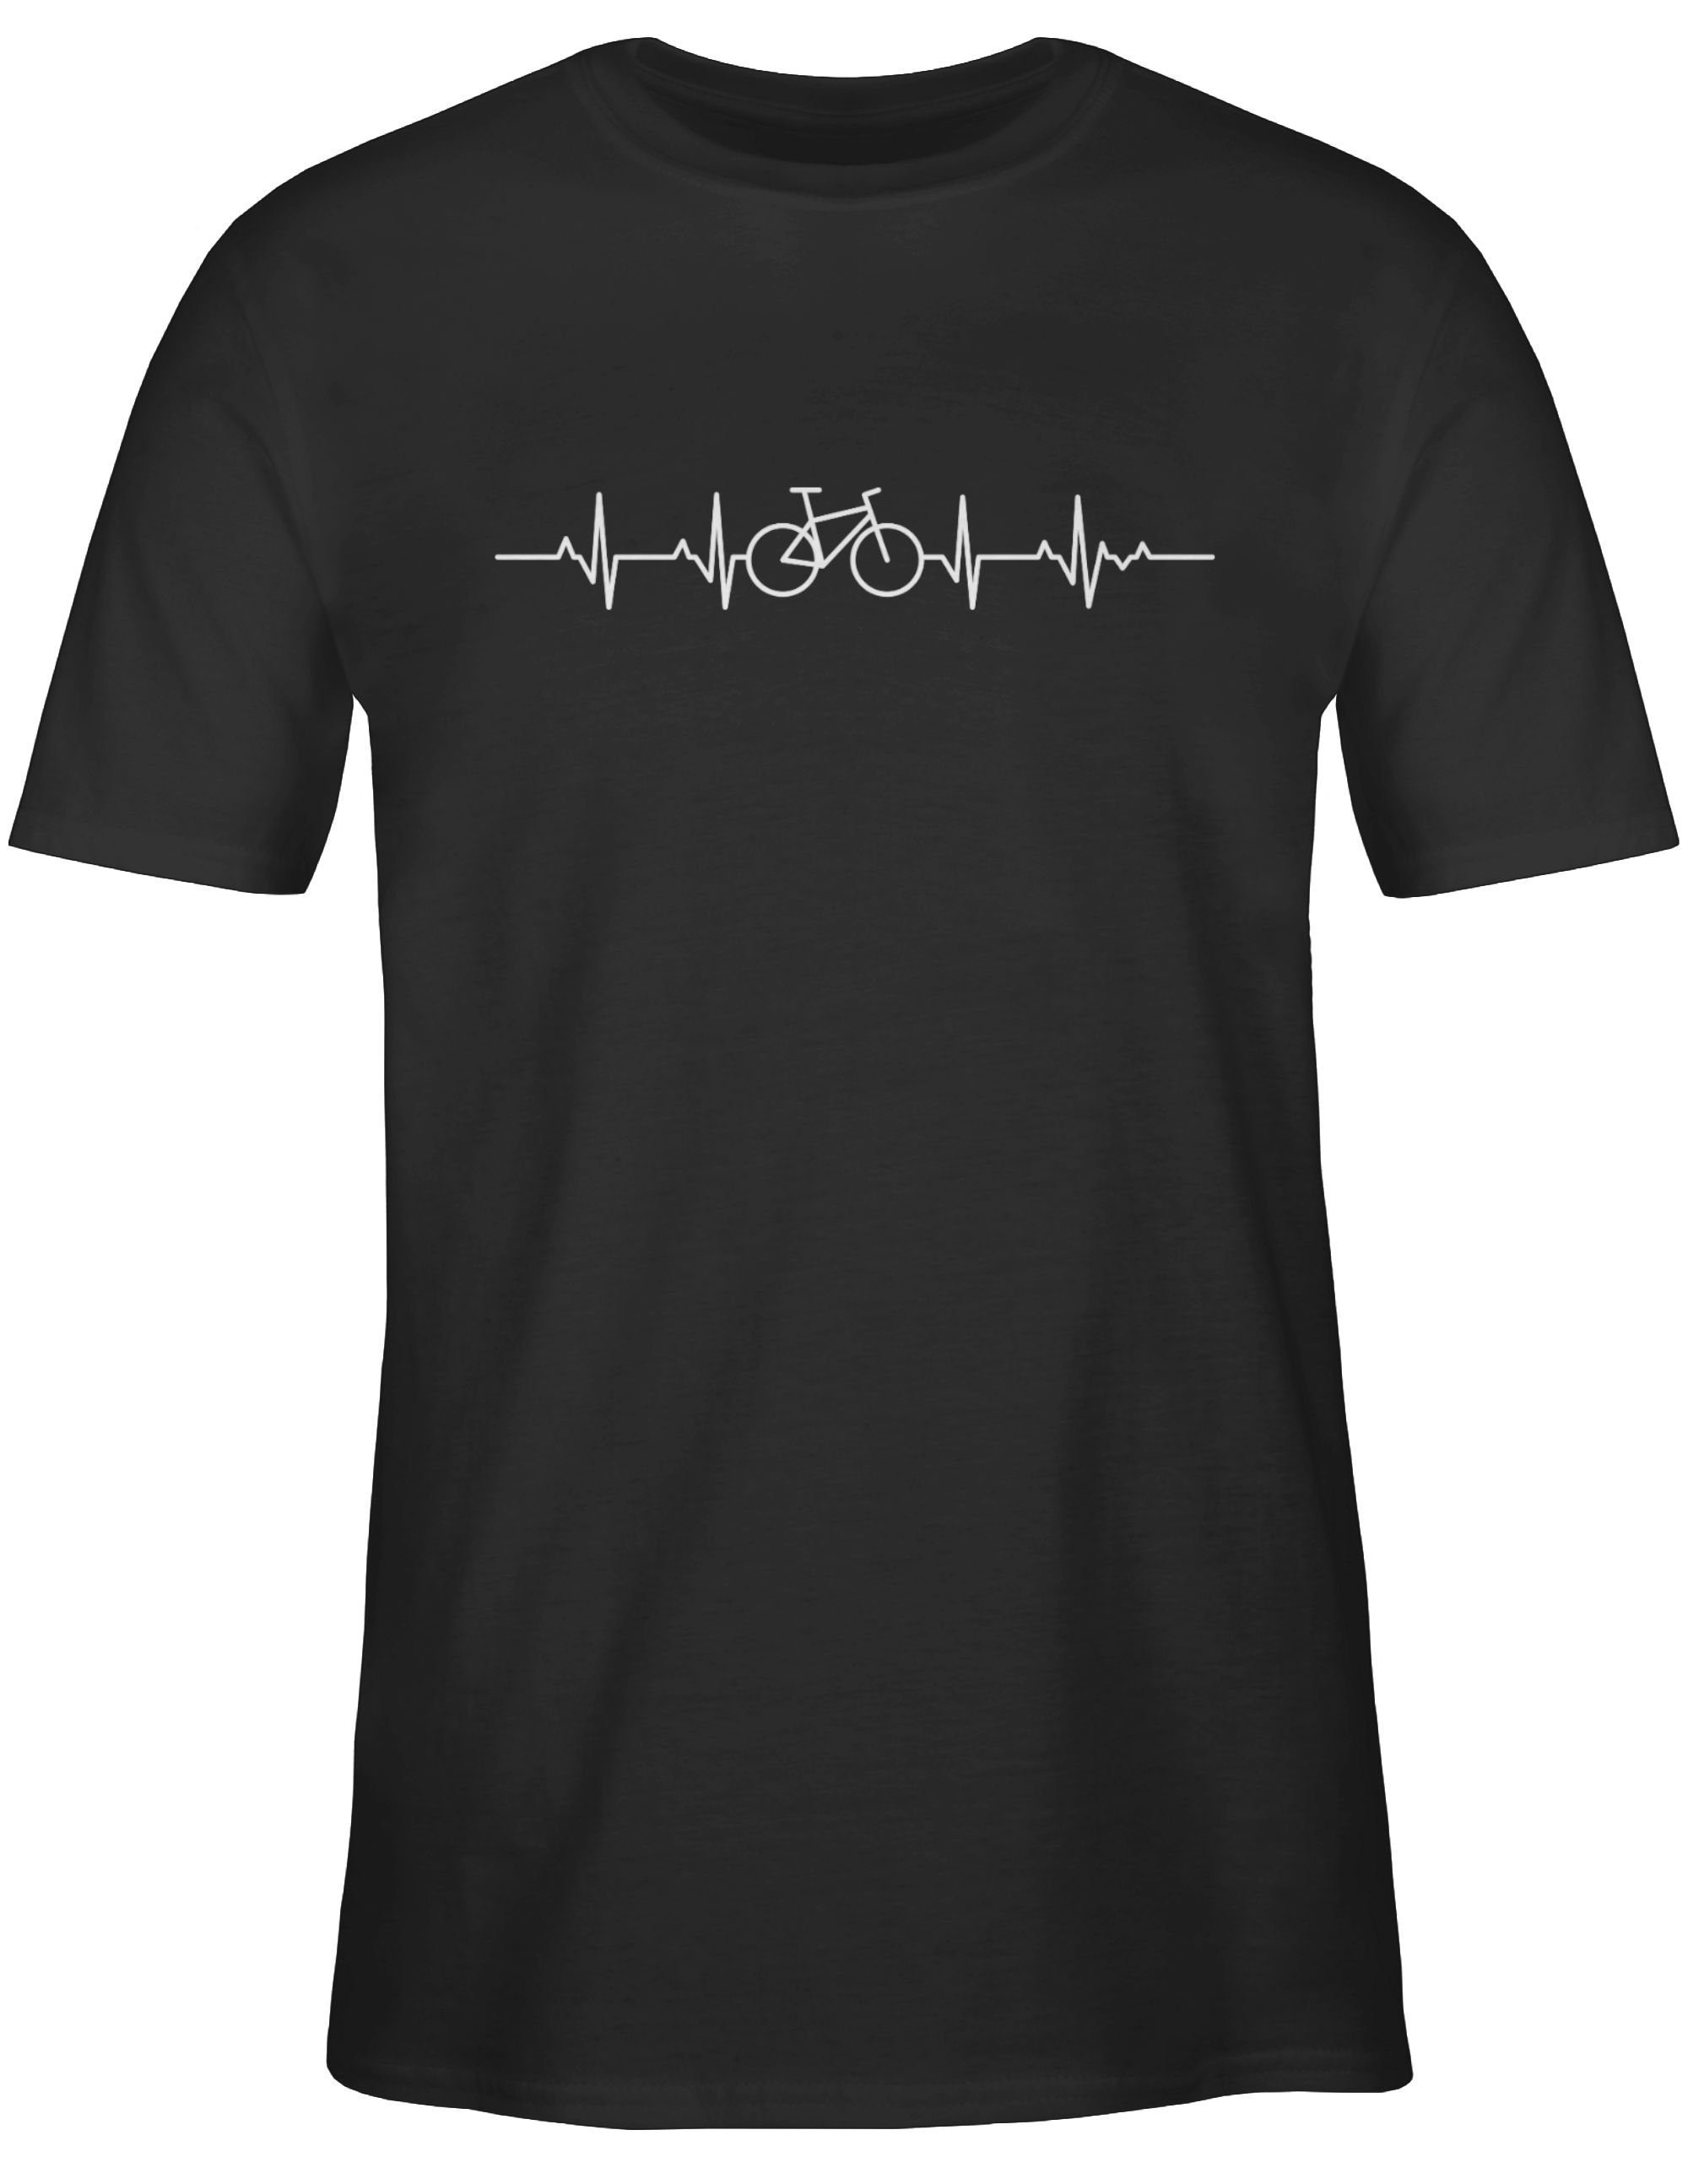 Mountainbiker Fahrzeuge Geschenk Fahrrad T-Shirt Shirtracer Schwarz Herzschlag Rad 02